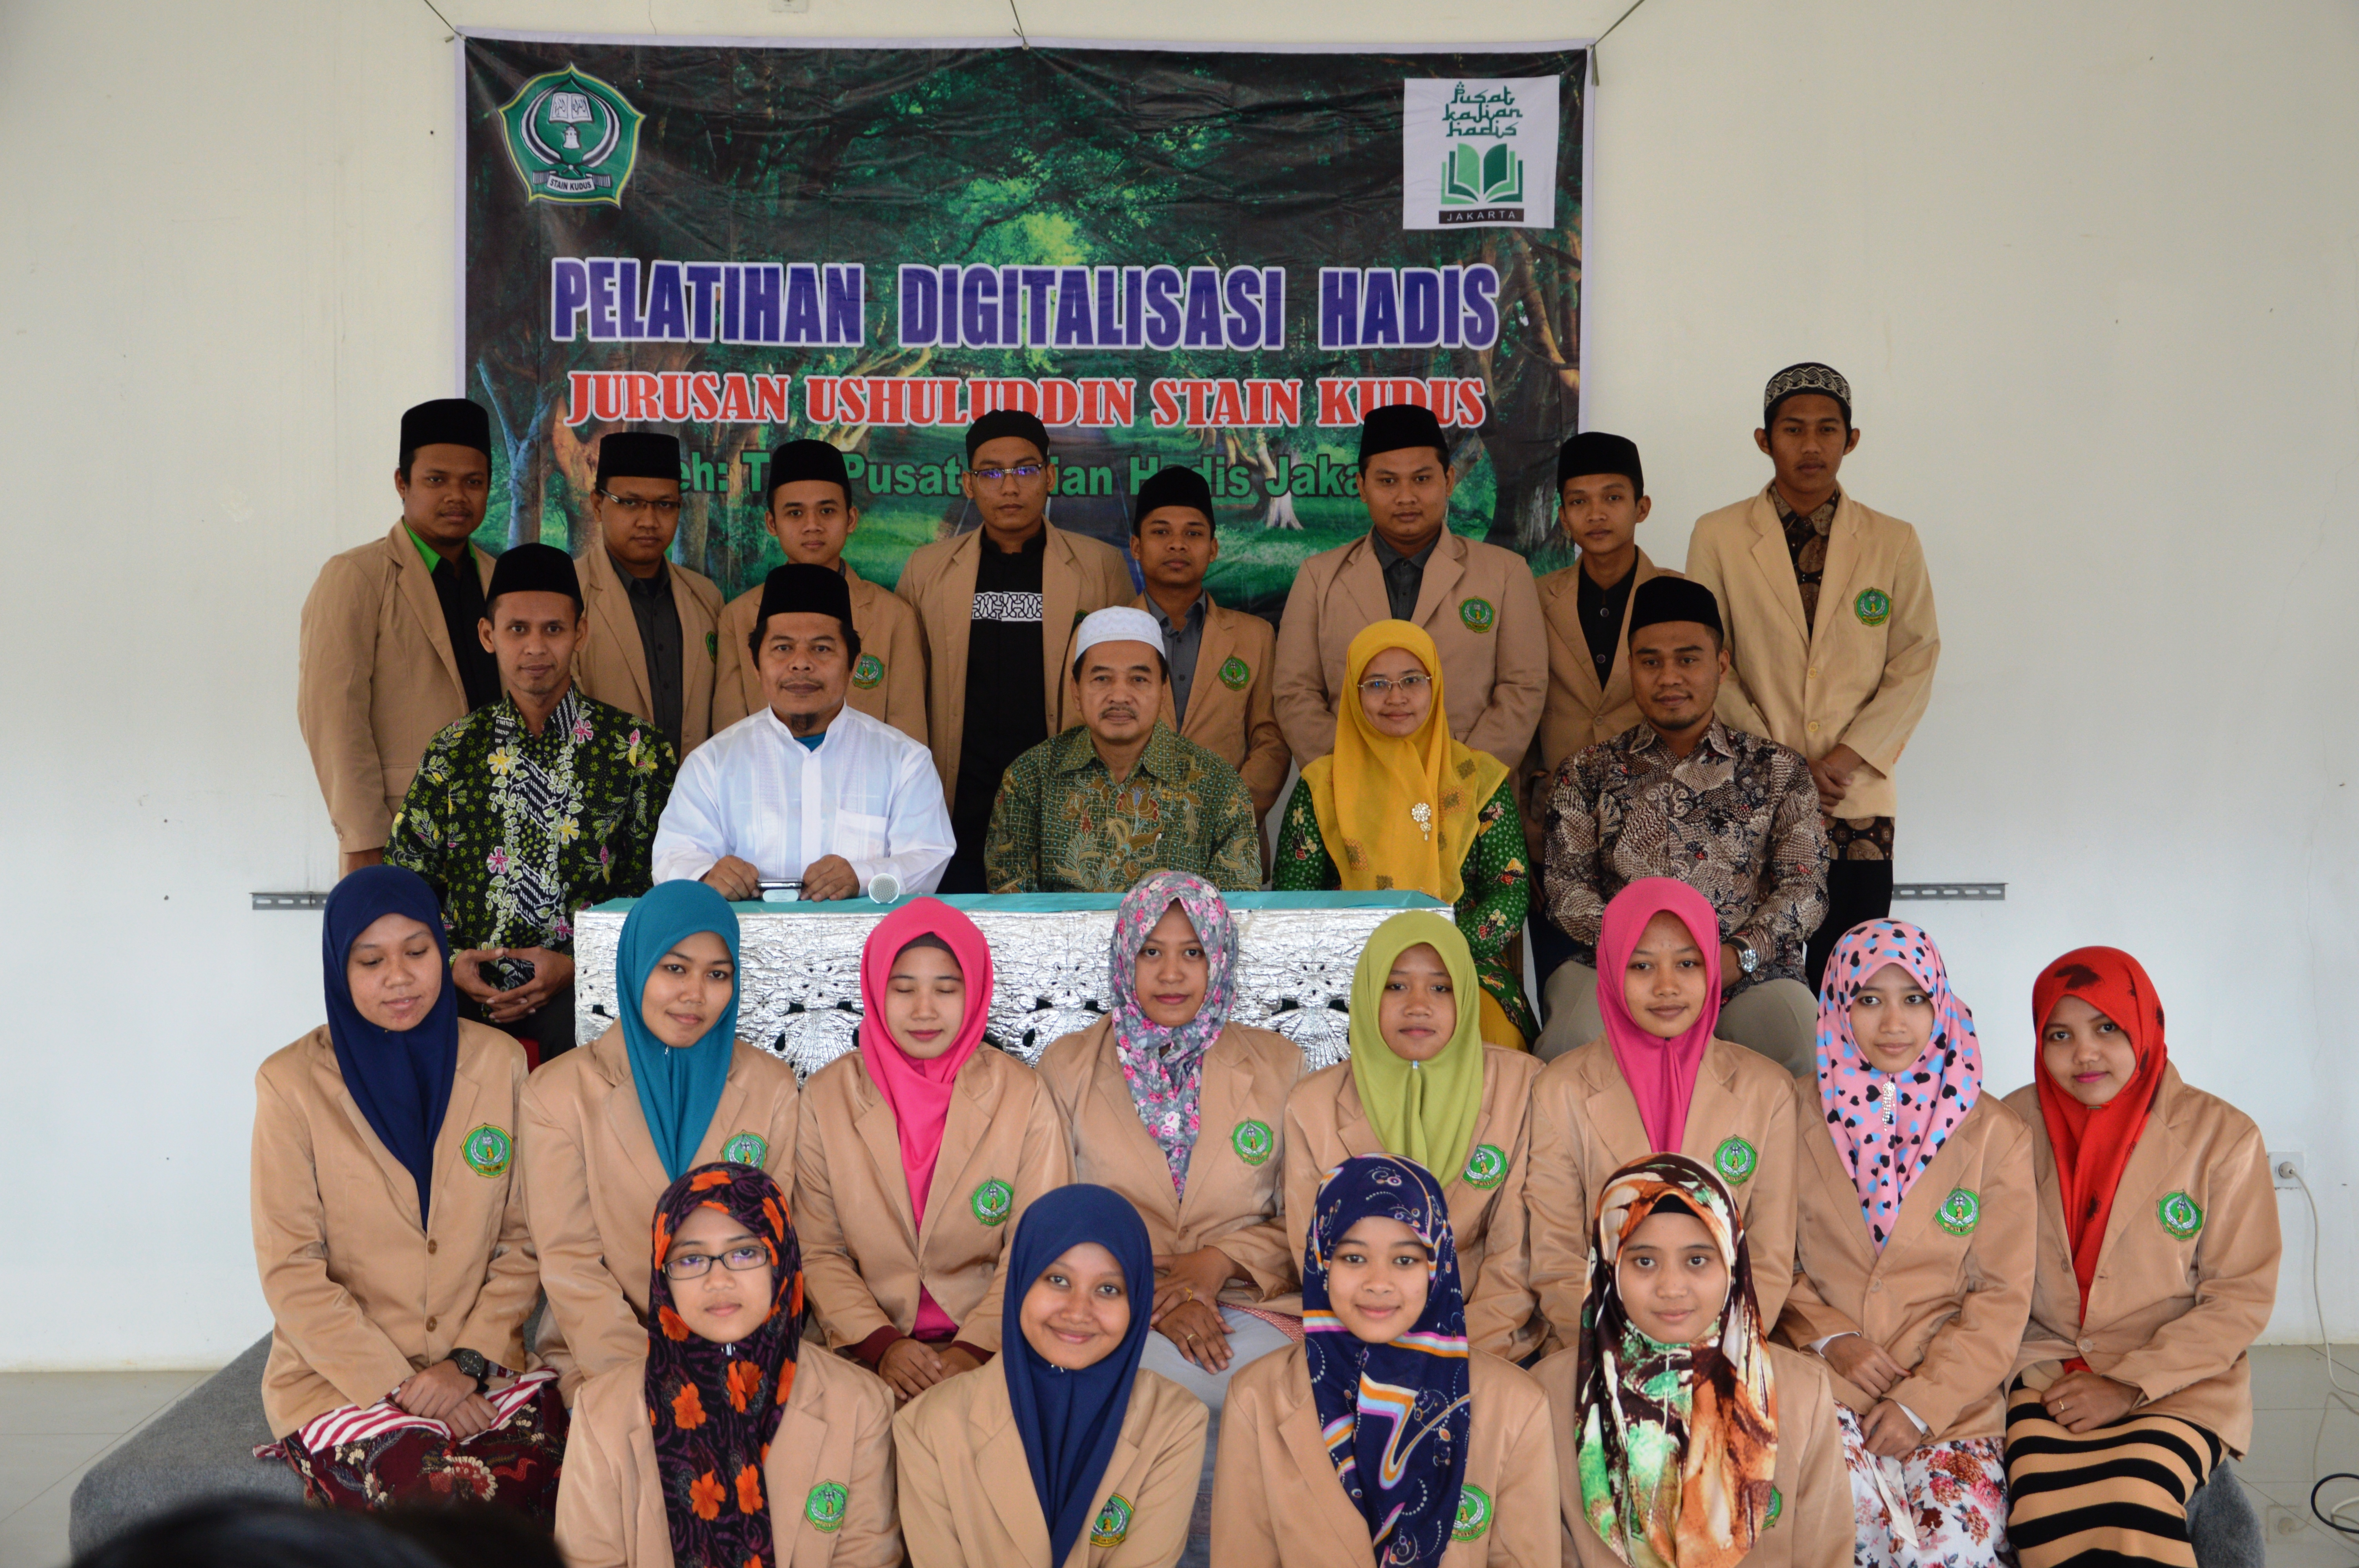 Pelatihan Digitalisasi Hadis Fakultas Ushuluddin STAIN Kudus